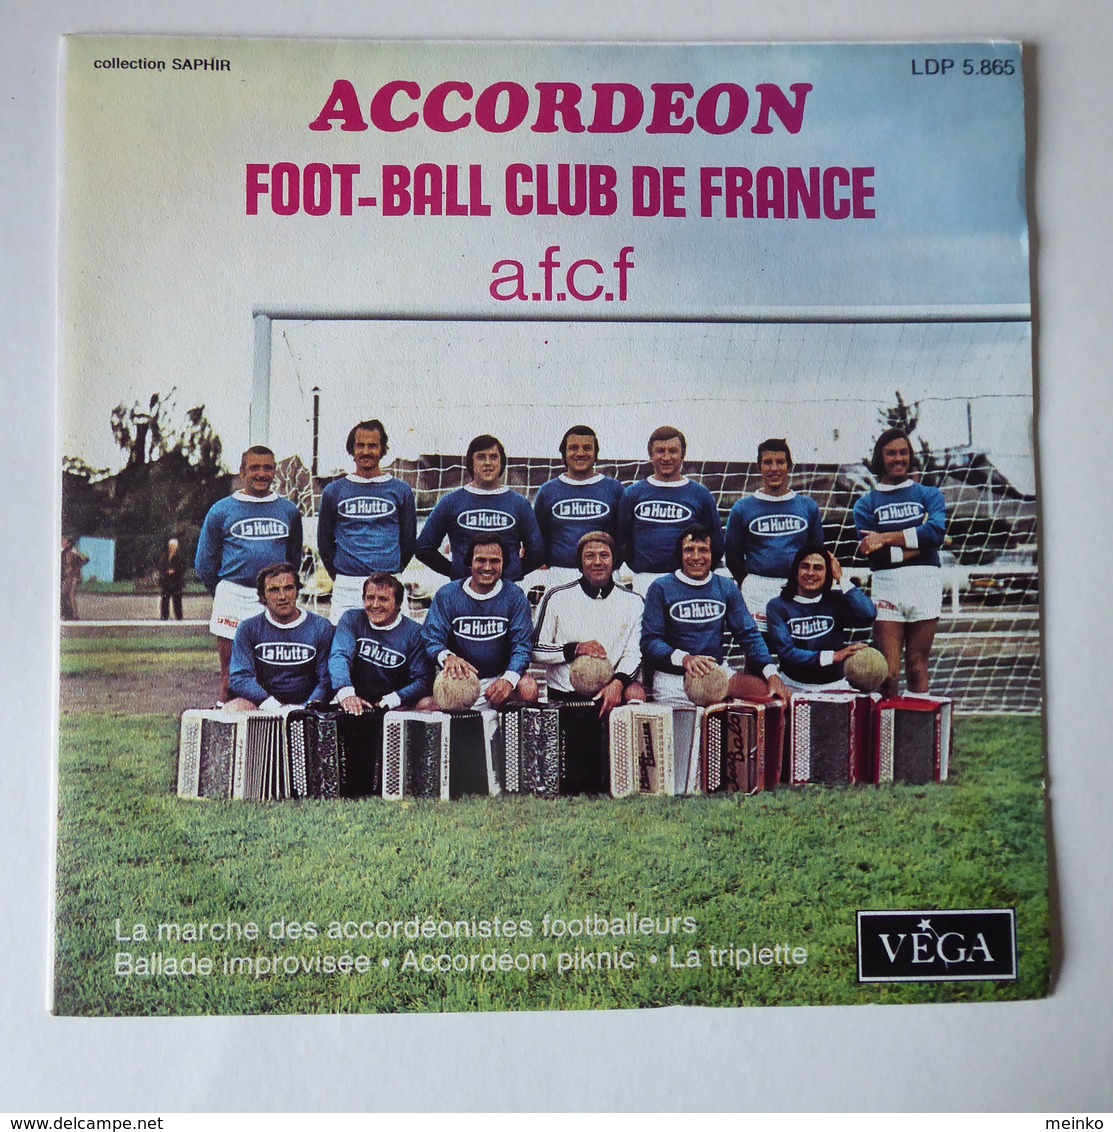 ACCORDEON FOOT-BALL CLUB DE FRANCE - Instrumental